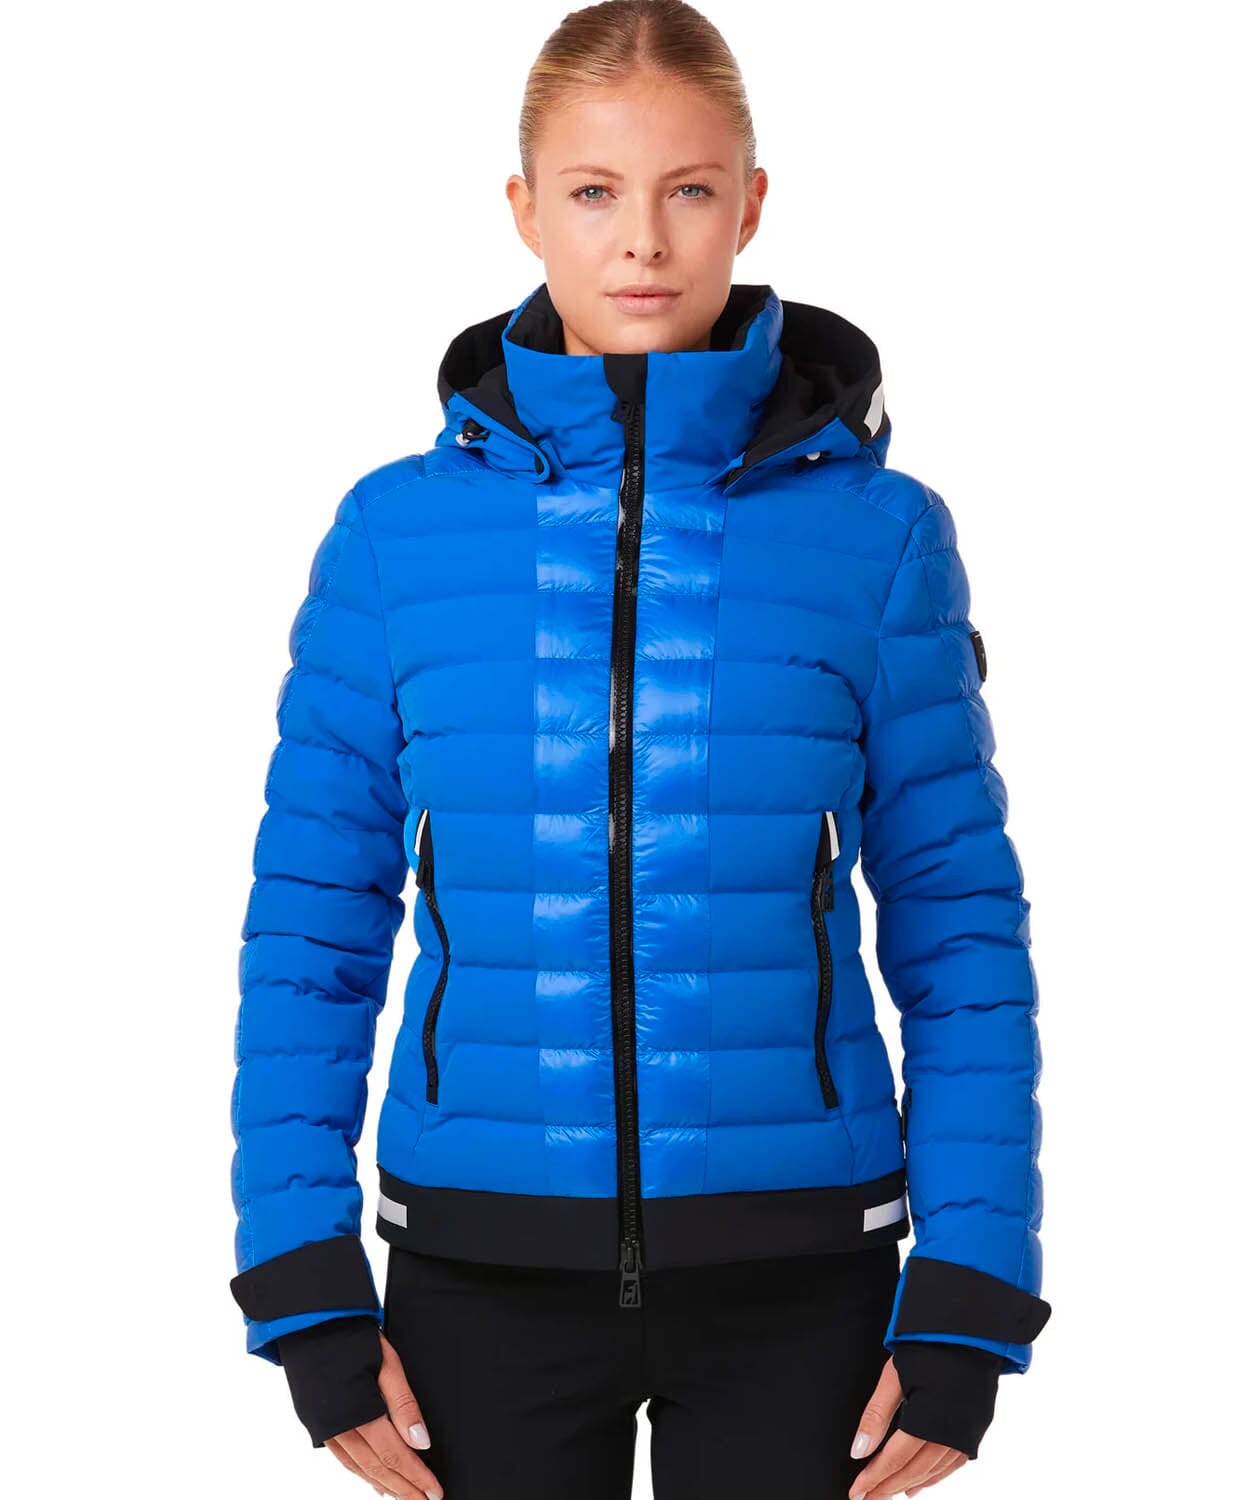 Women's Norma Ski Jacket Ski Jackets Toni Sailer Shine Blue 34/XS 